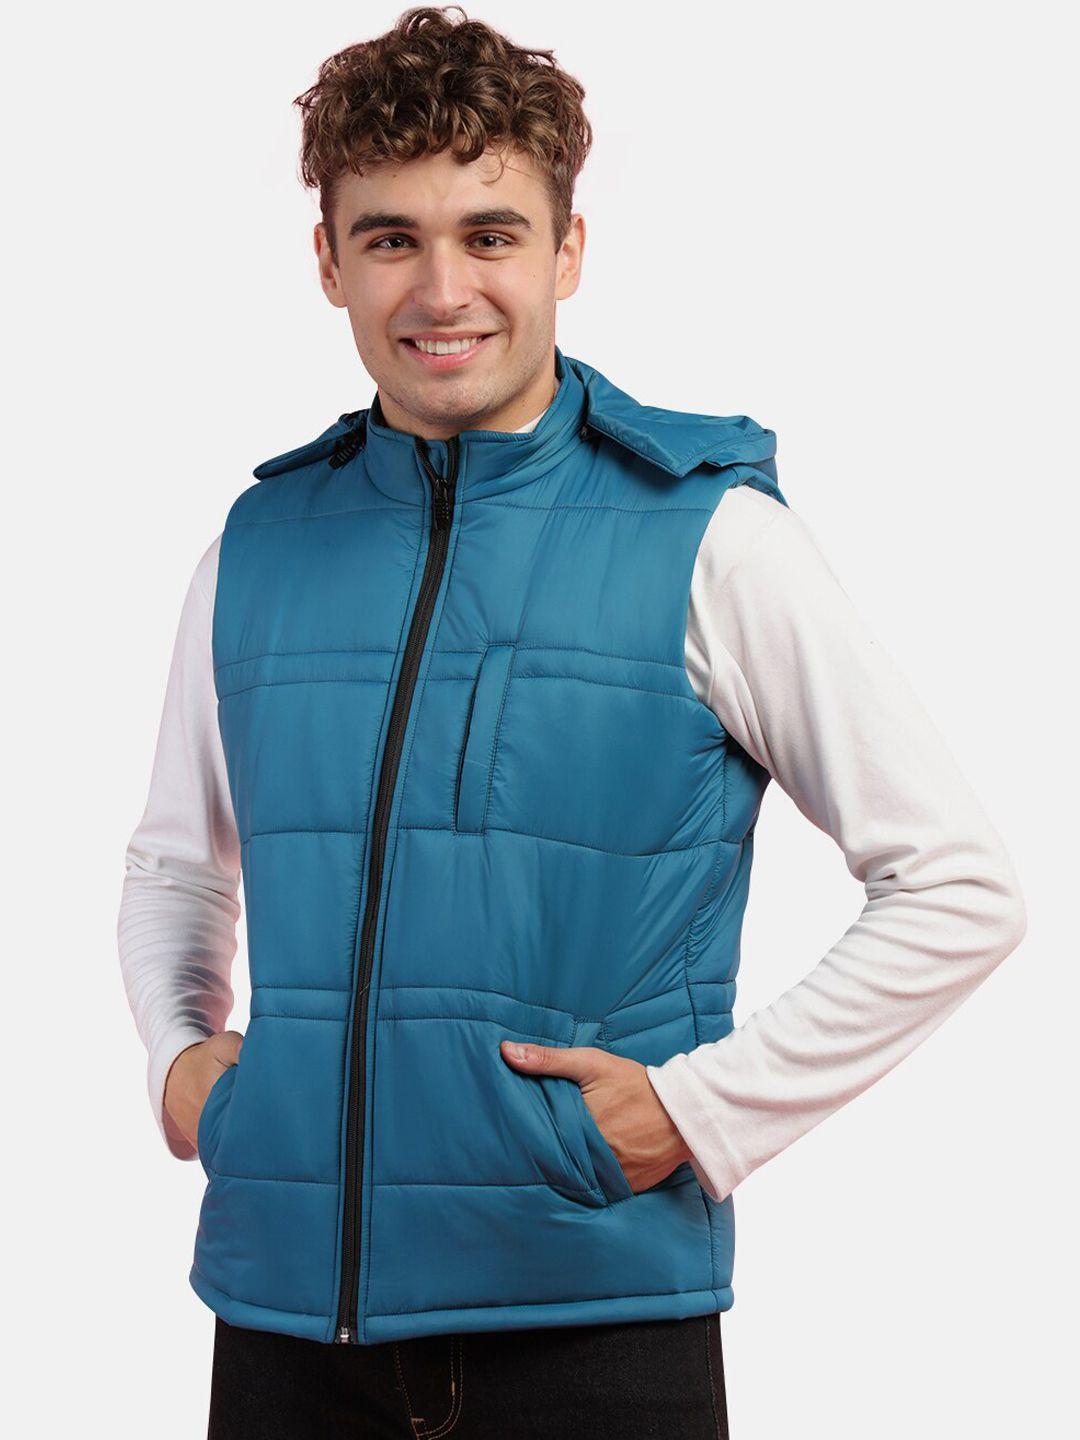 chkokko-men-teal-outdoor-padded-jacket